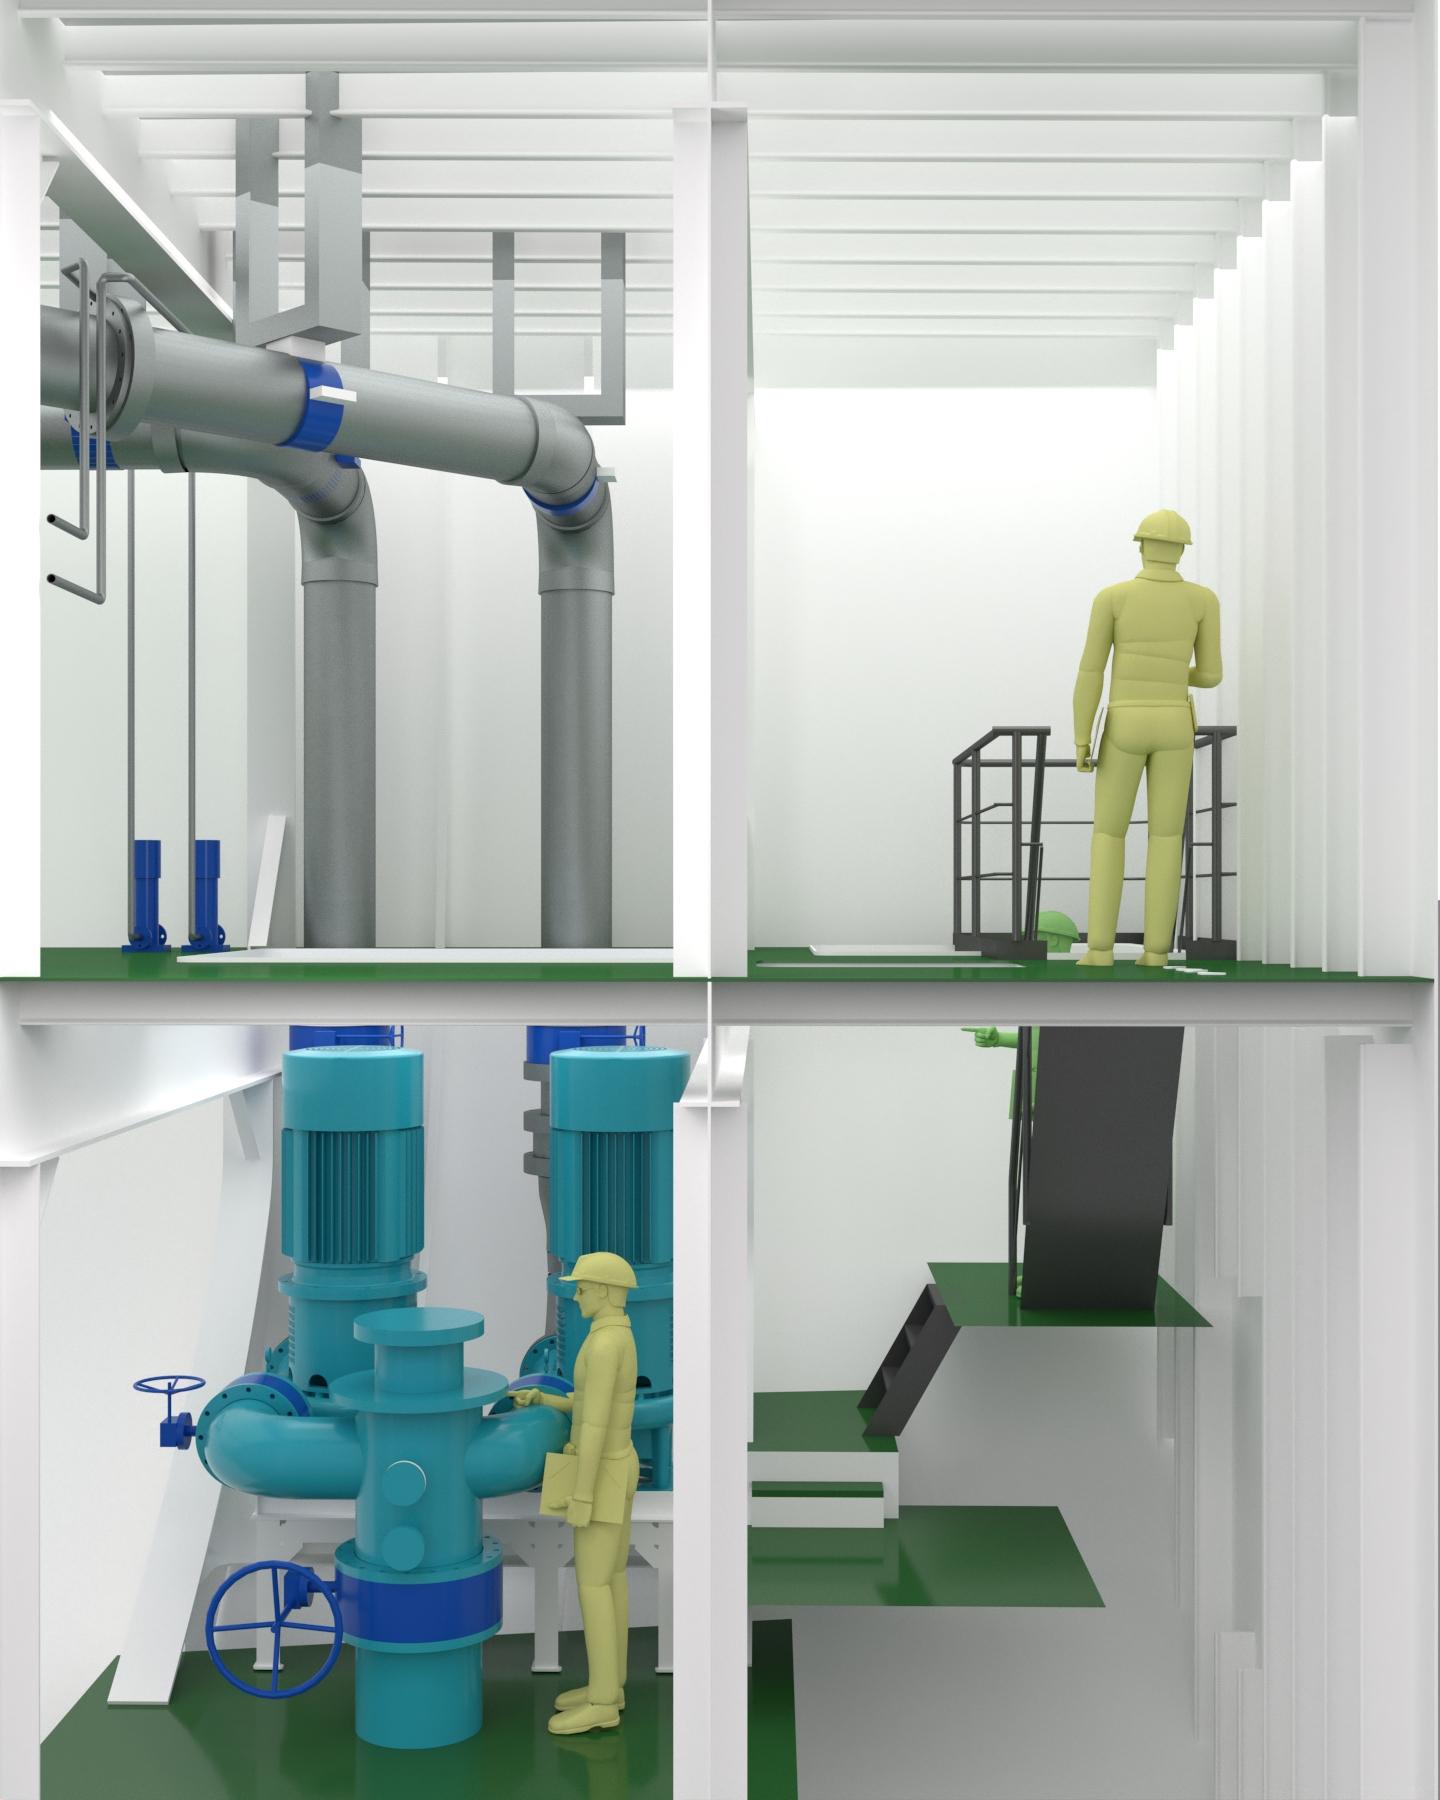 Ballast Water Treatment System (BWTS) Retrofit & Scrubber Retrofit Engineering projects